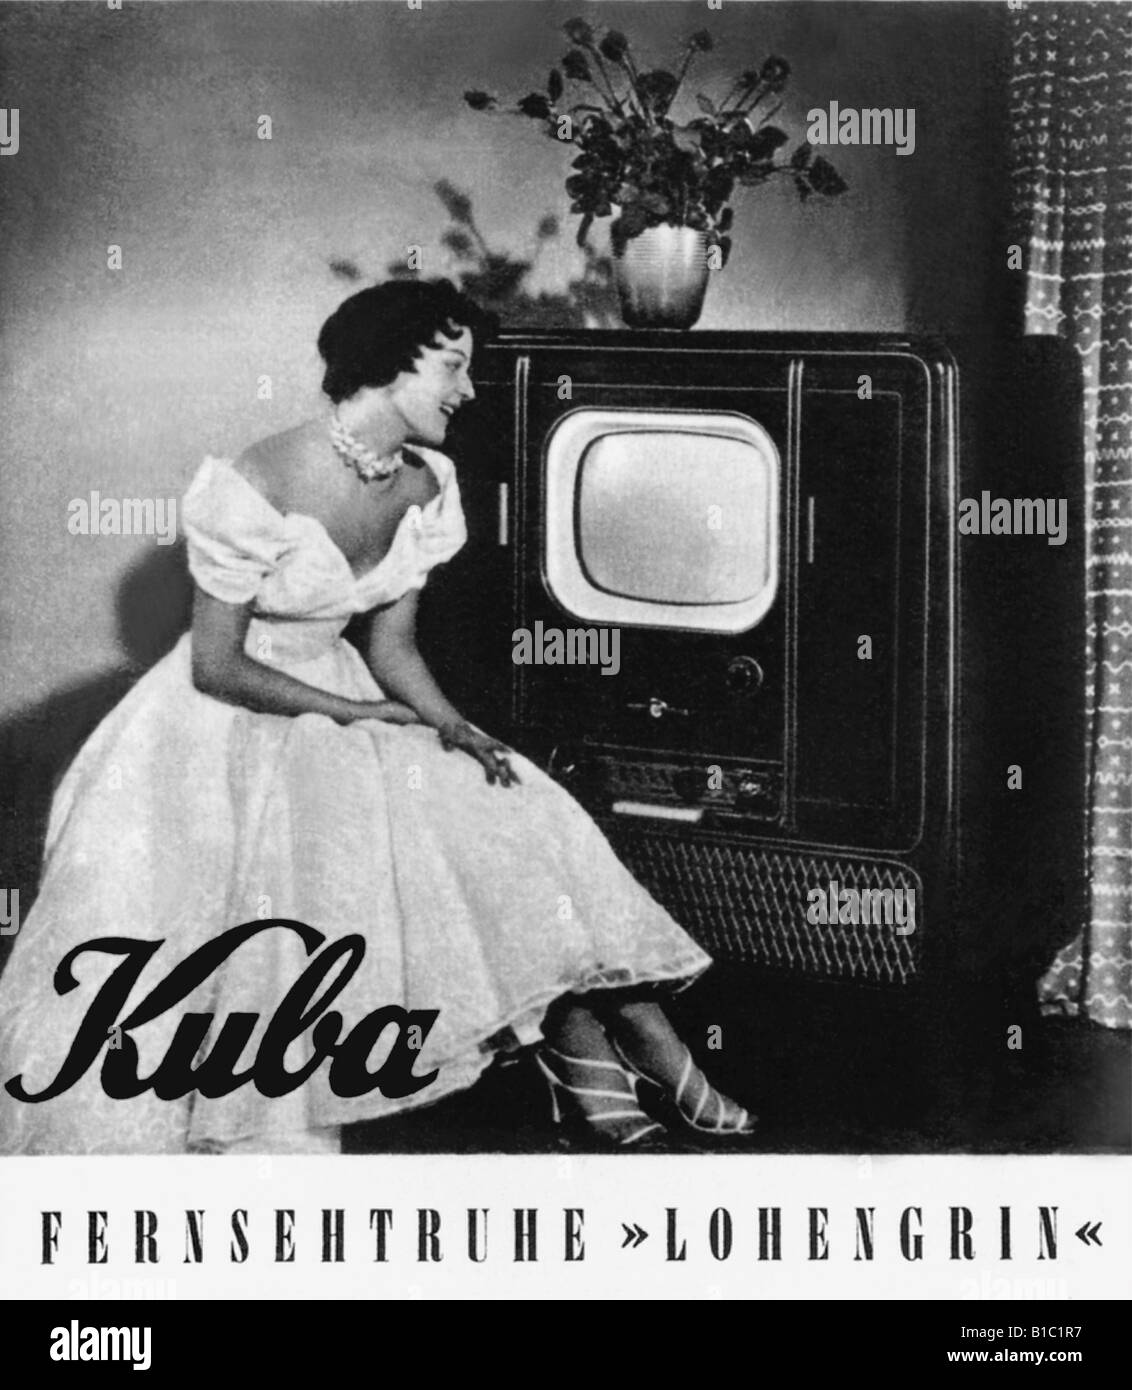 Broadcast, télévision, publicité, TV set Kuba Modell Lohengrin, femme en robe, Allemagne, 1954, Banque D'Images